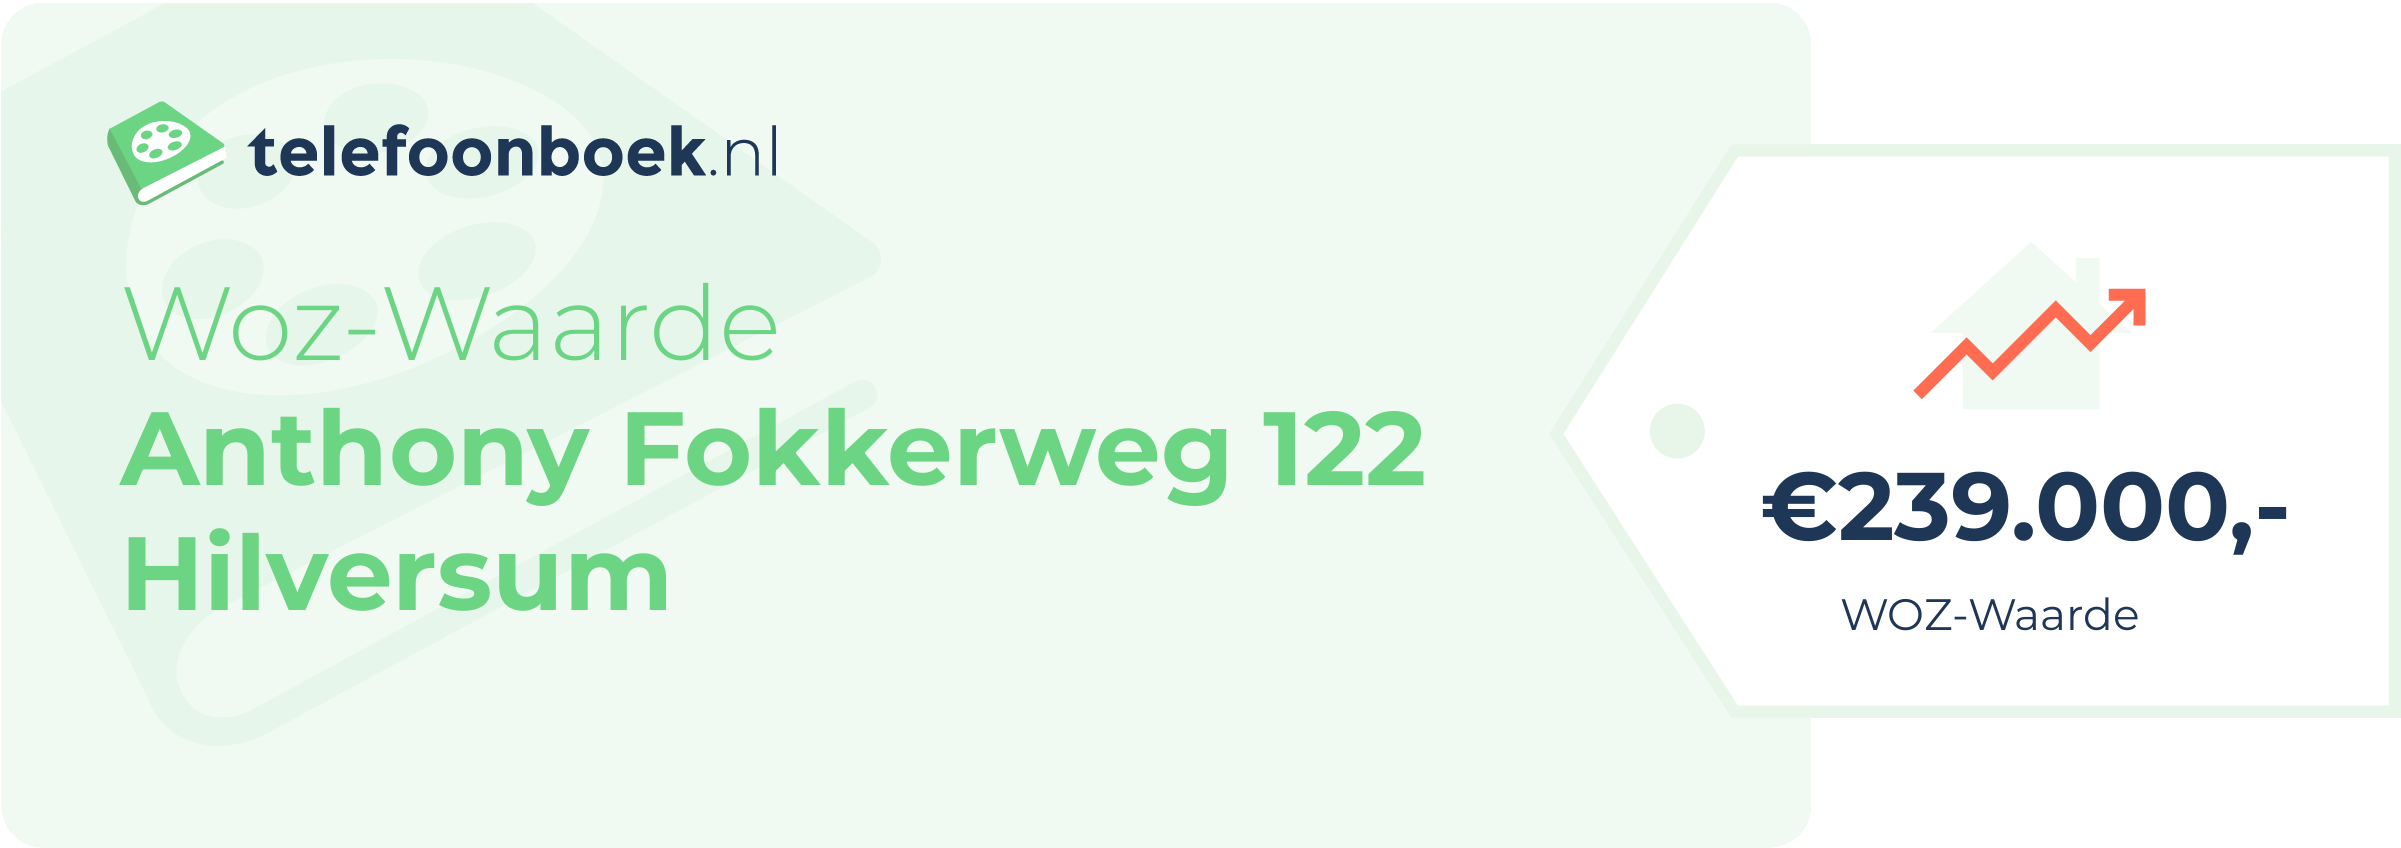 WOZ-waarde Anthony Fokkerweg 122 Hilversum